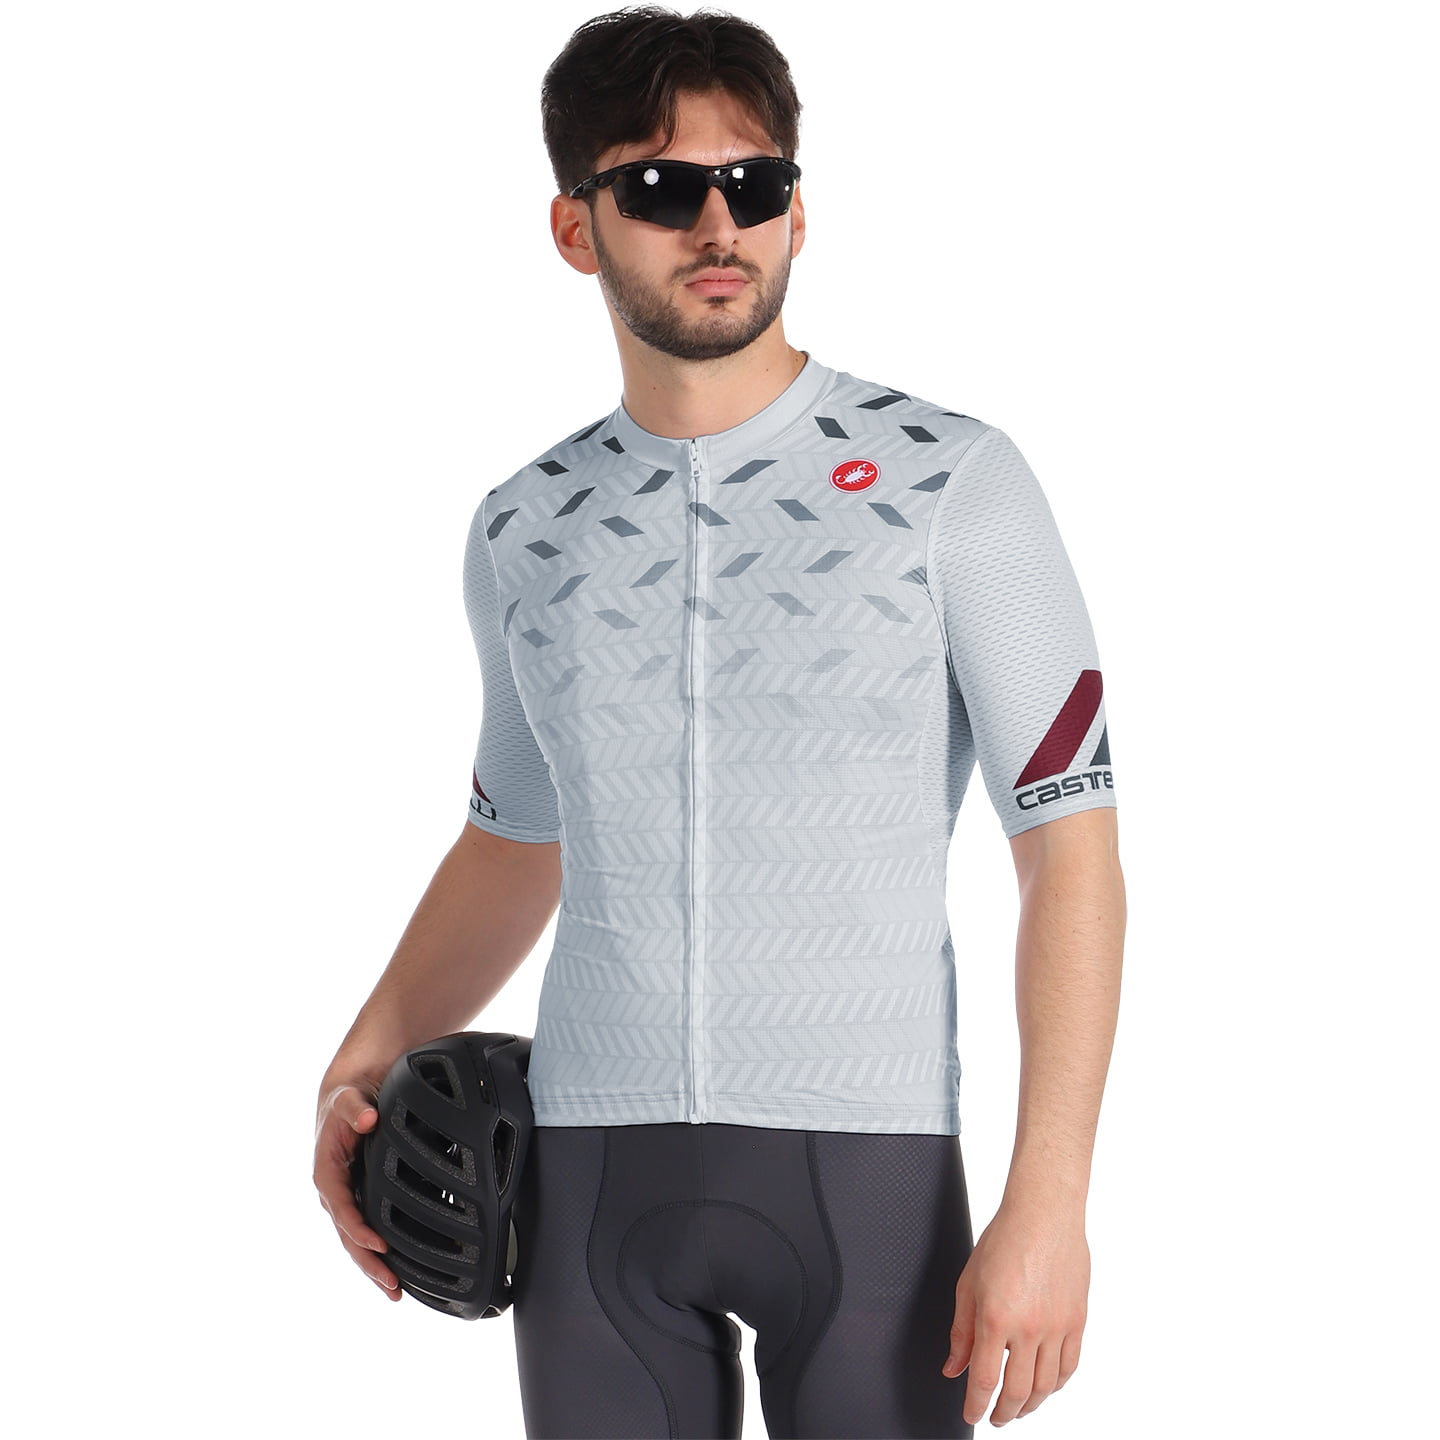 CASTELLI Avanti 2 Short Sleeve Jersey Short Sleeve Jersey, for men, size S, Cycling jersey, Cycling clothing